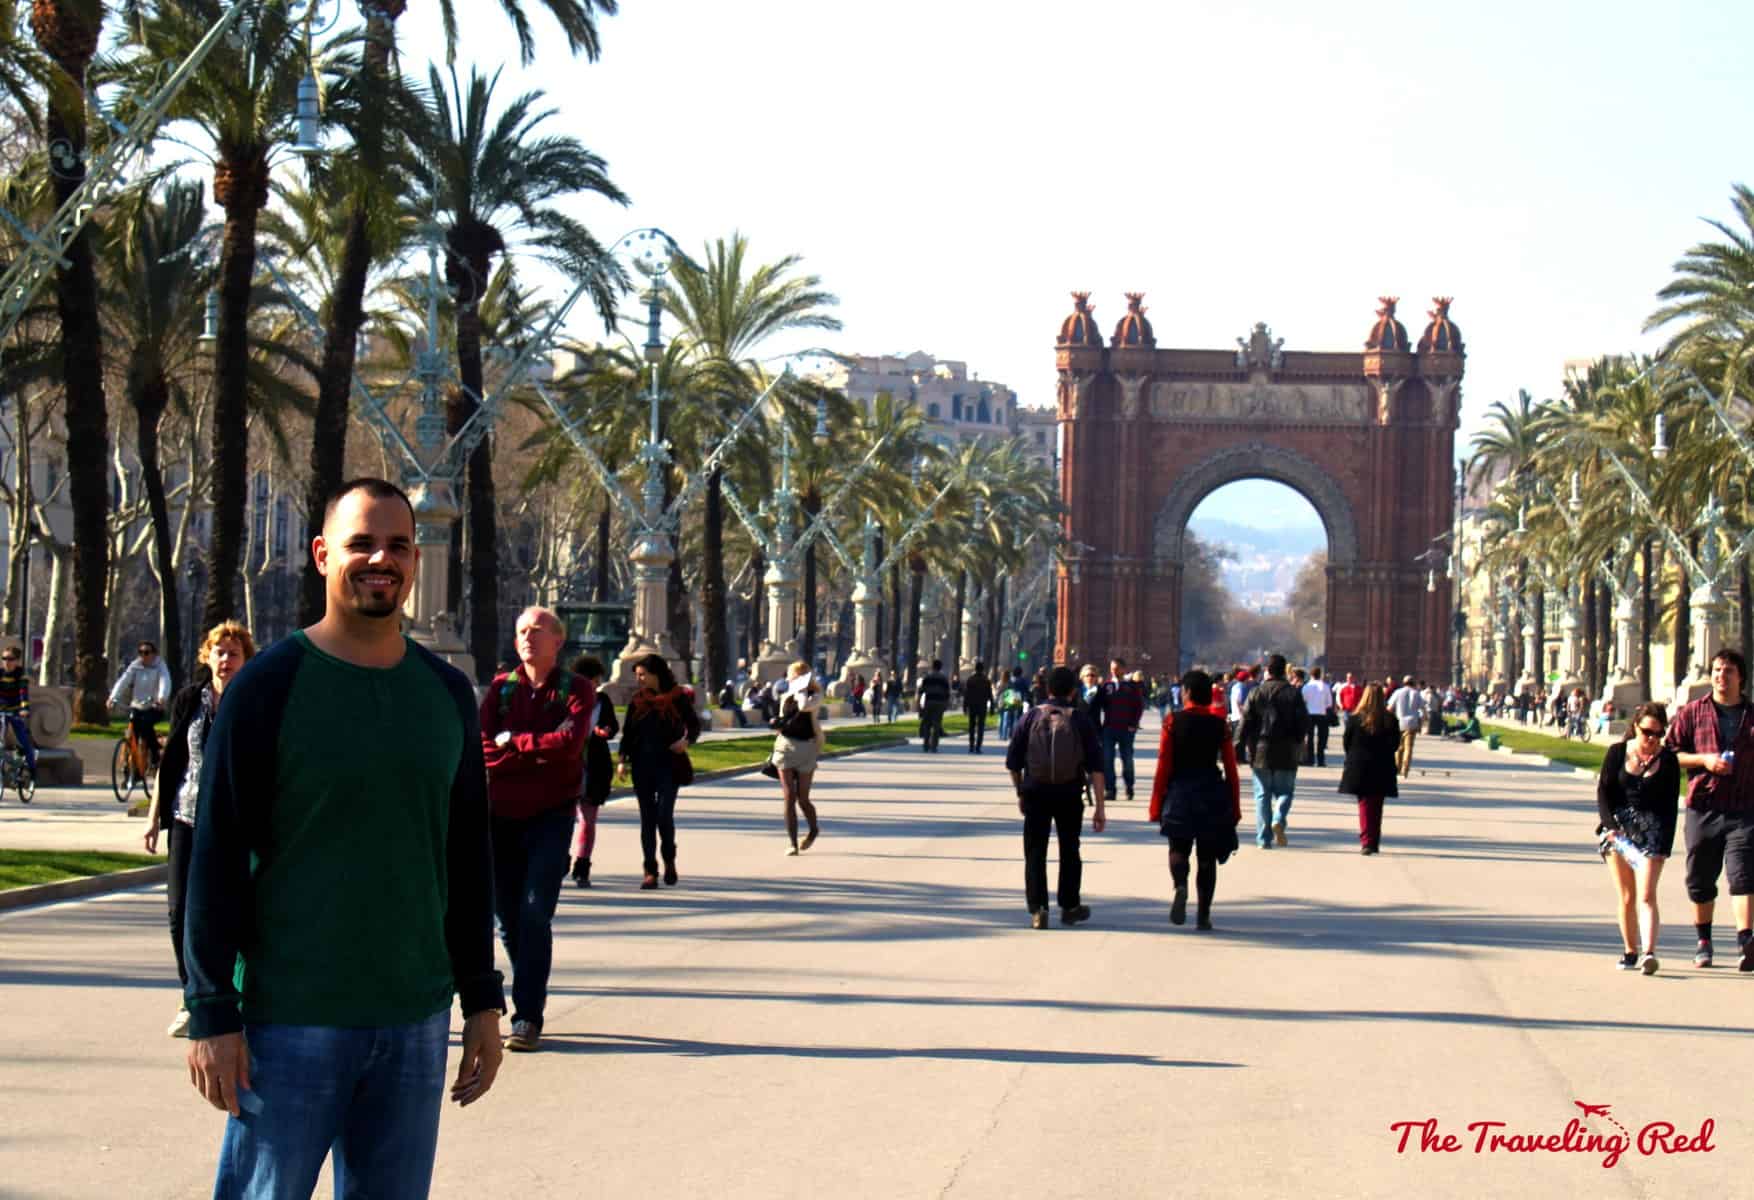 Arc de Triomf in Barcelona, Spain.